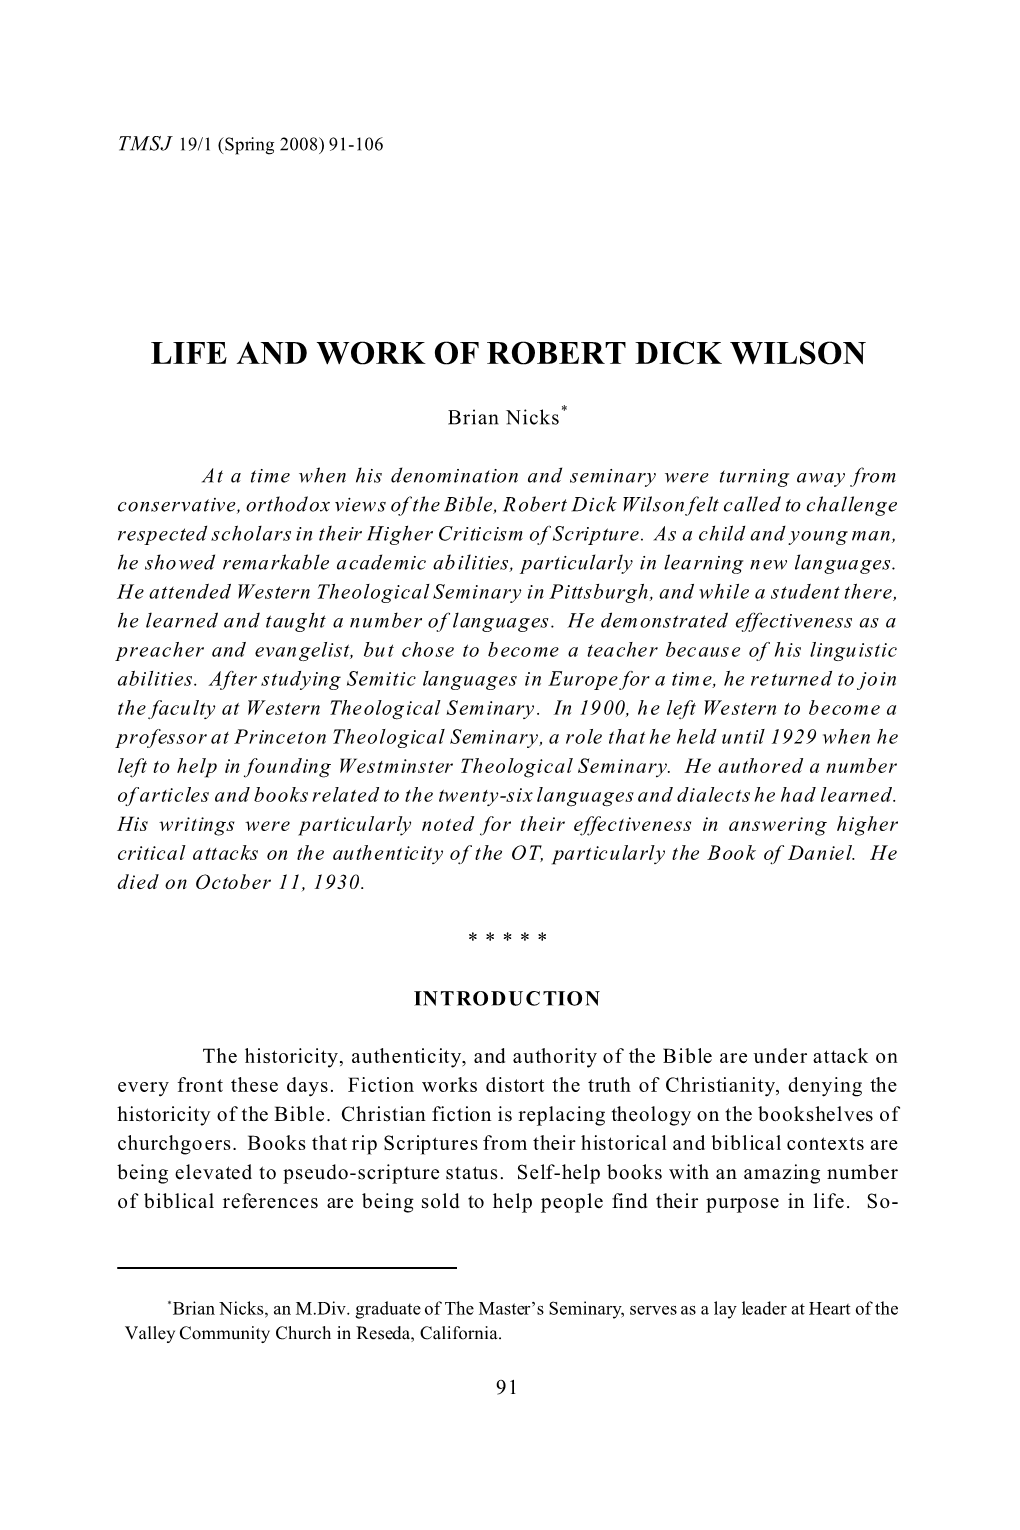 Life and Work of Robert Dick Wilson